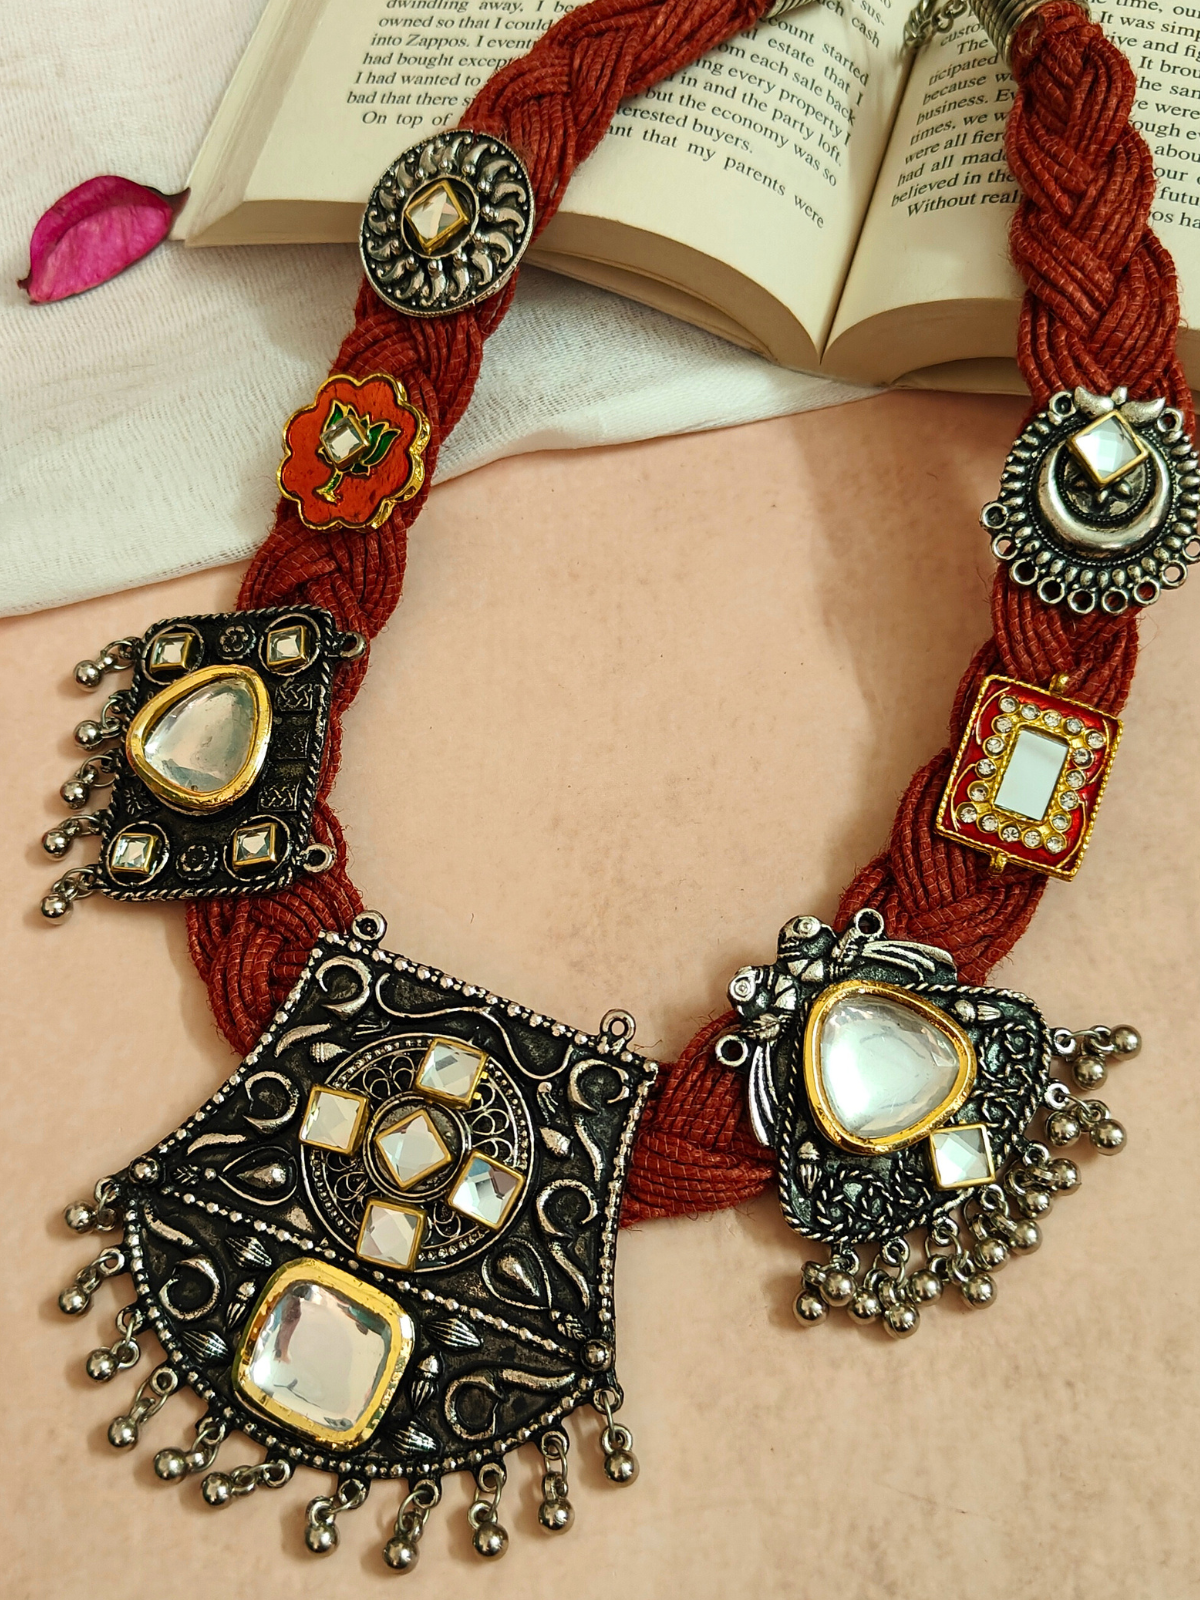 The Exquisite Garnet Jute Necklace